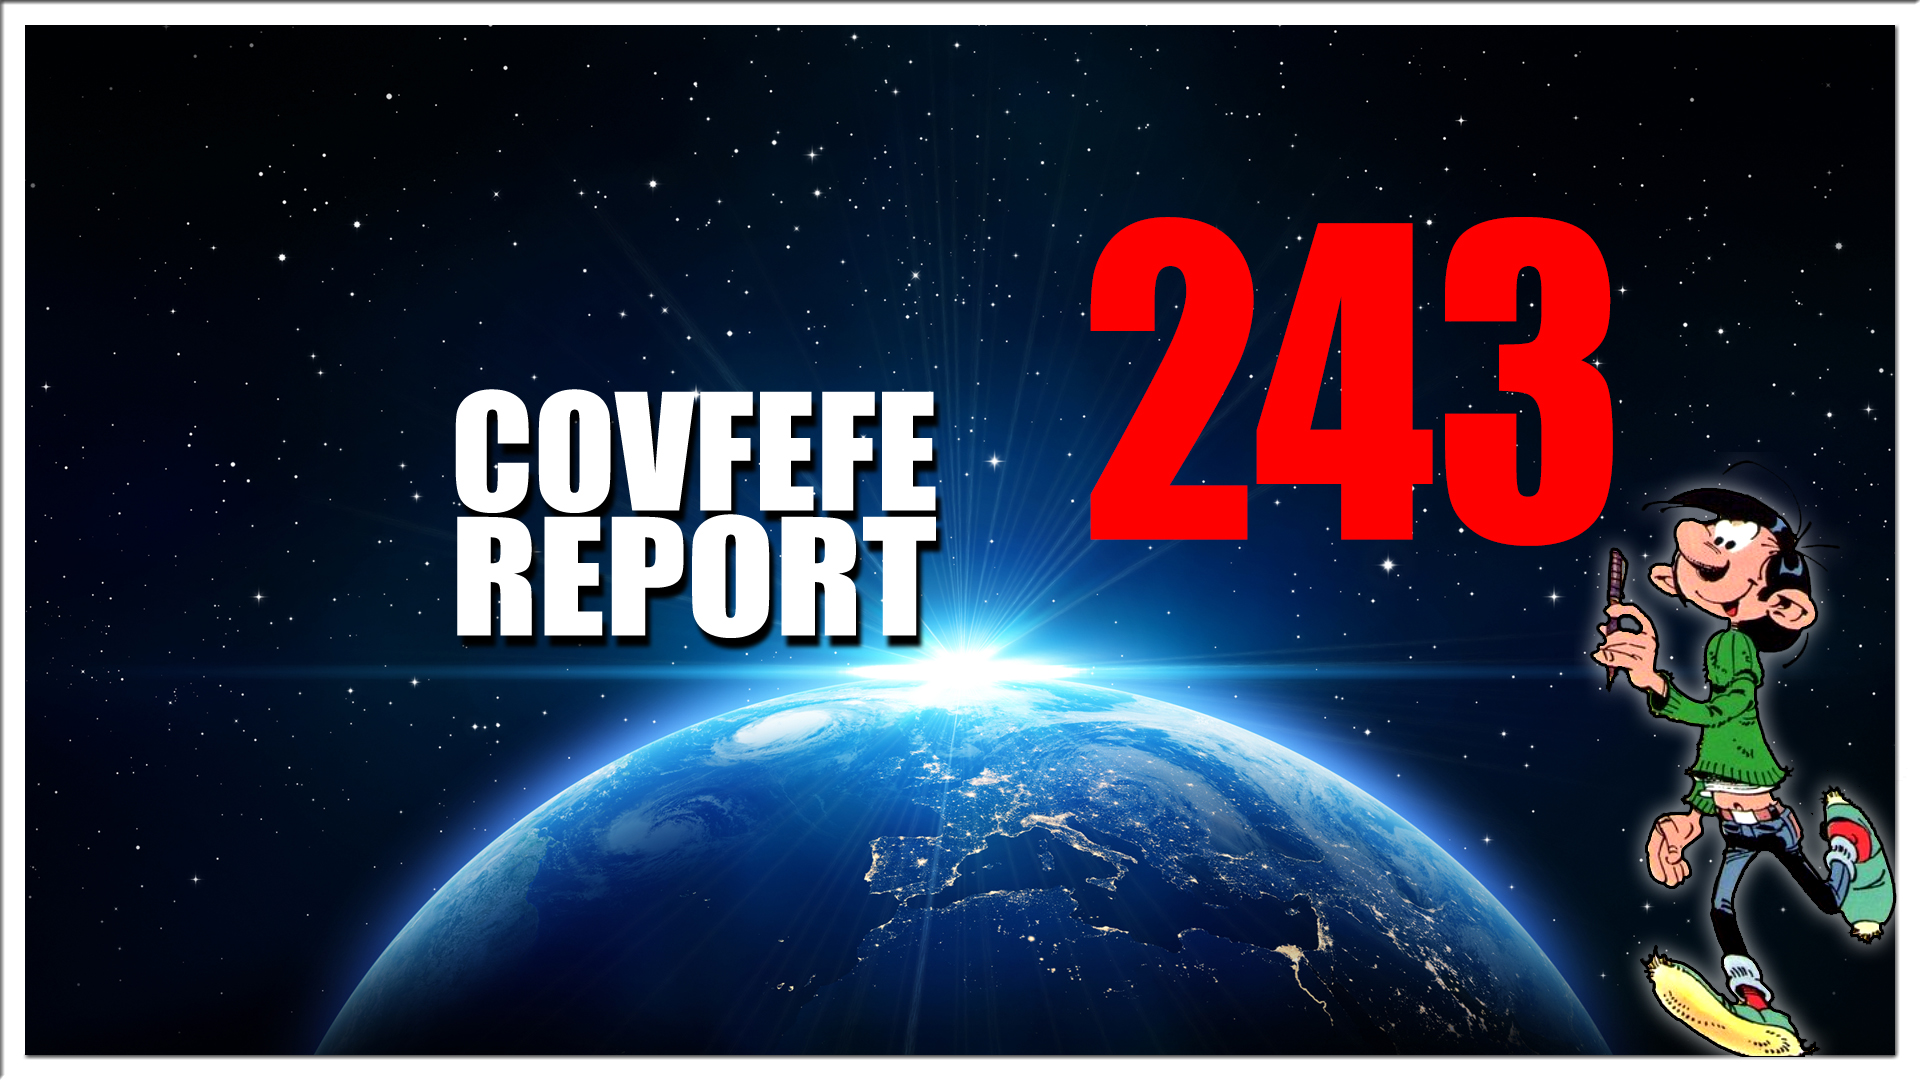 Covfefe Report 243. ngt